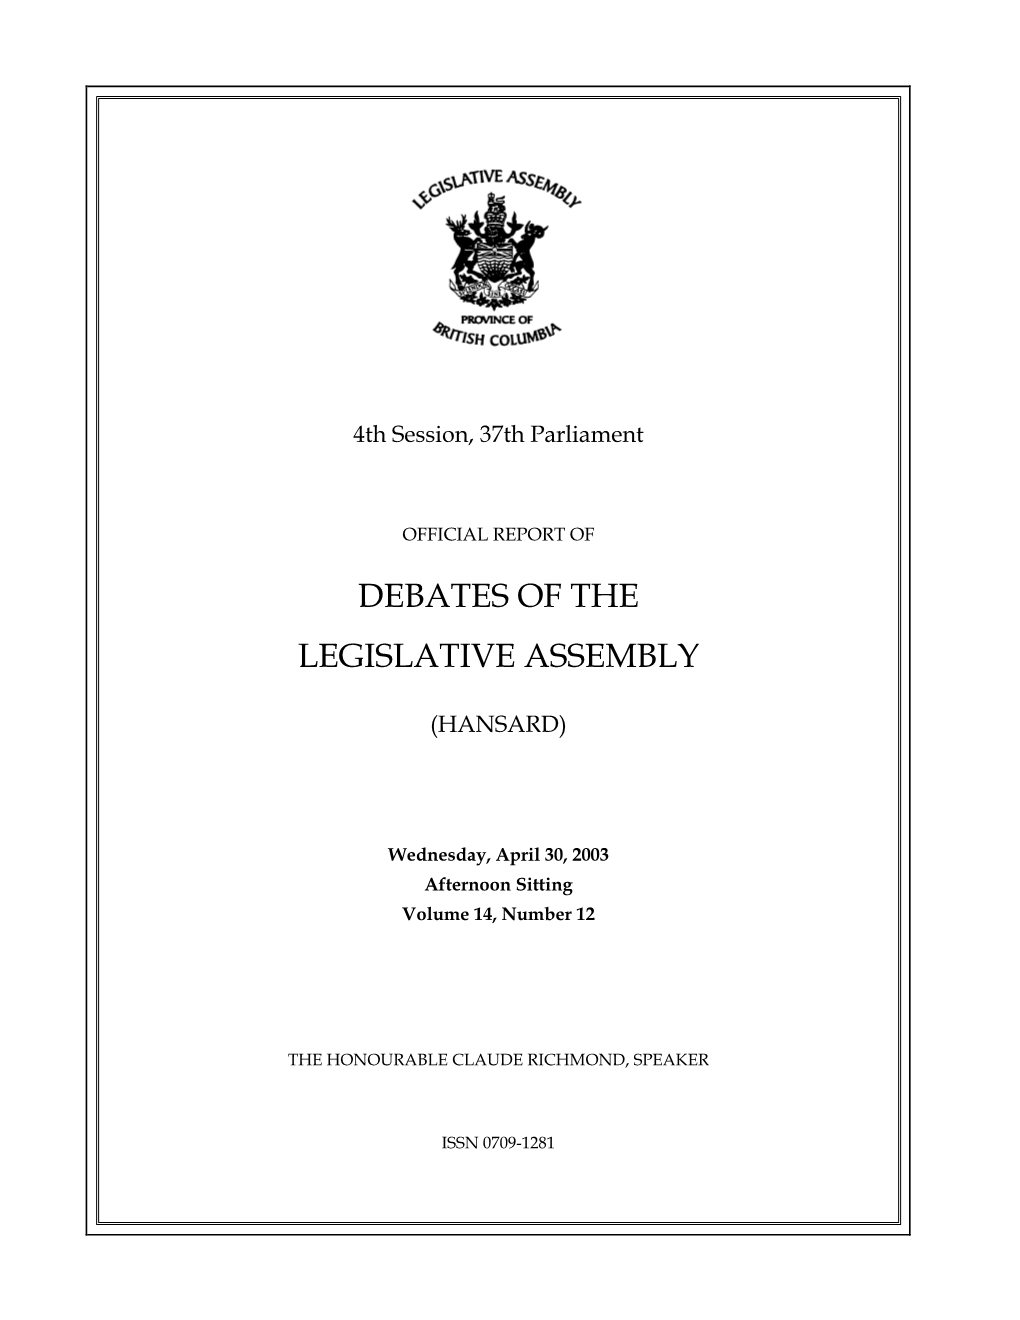 Hansard -- Wednesday, April 30, 2003 P.M. -- Vol. 14, No. 12 (PDF)